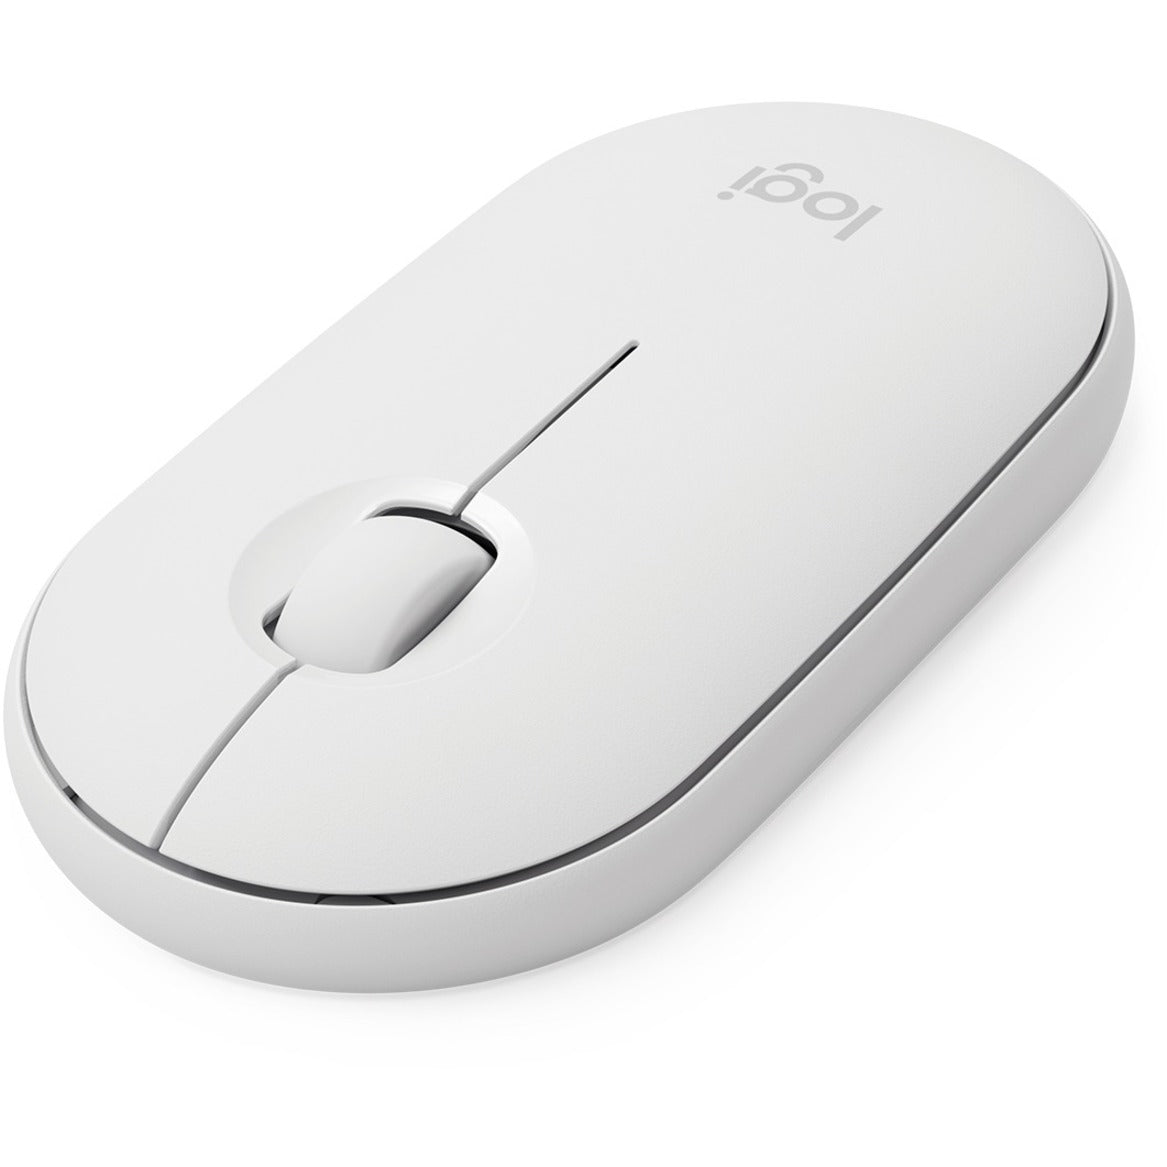 Logitech 910-005888 Pebble i345 Mouse, Bluetooth Wireless, iPad Compatible, 1000 dpi